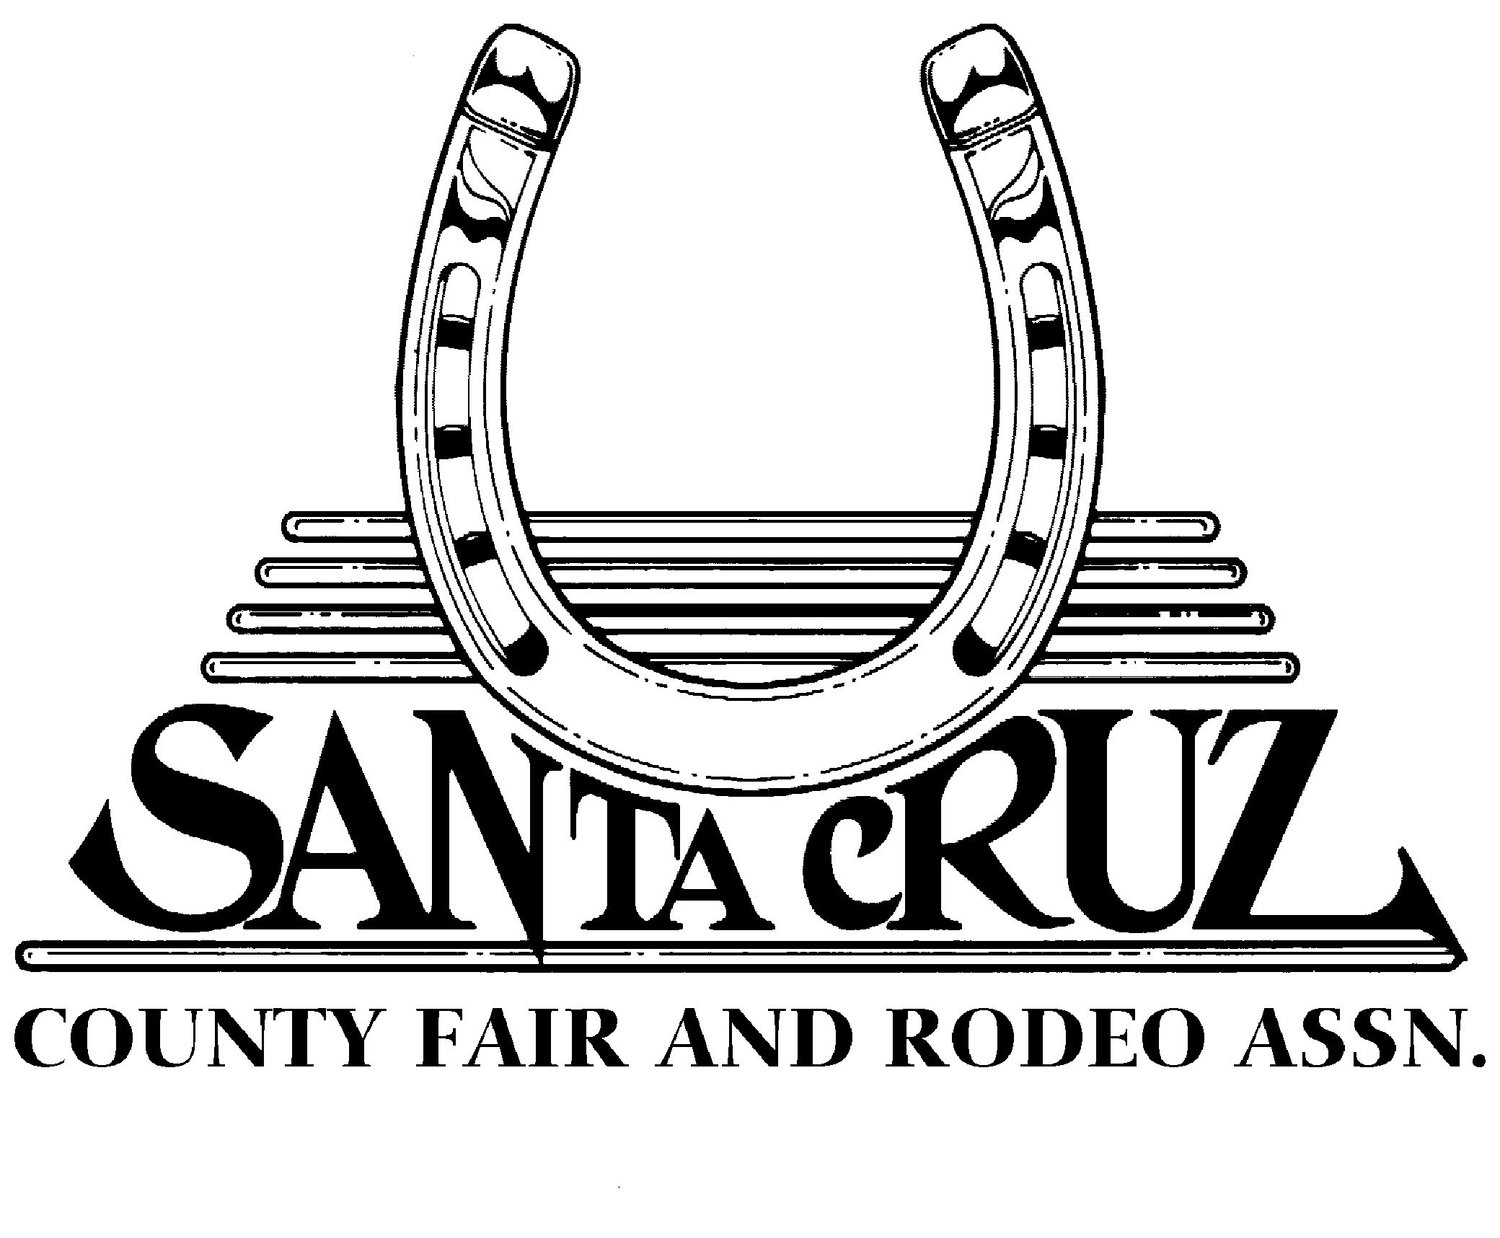 SANTA CRUZ COUNTY FAIR AND RODEO ASSOCIATION